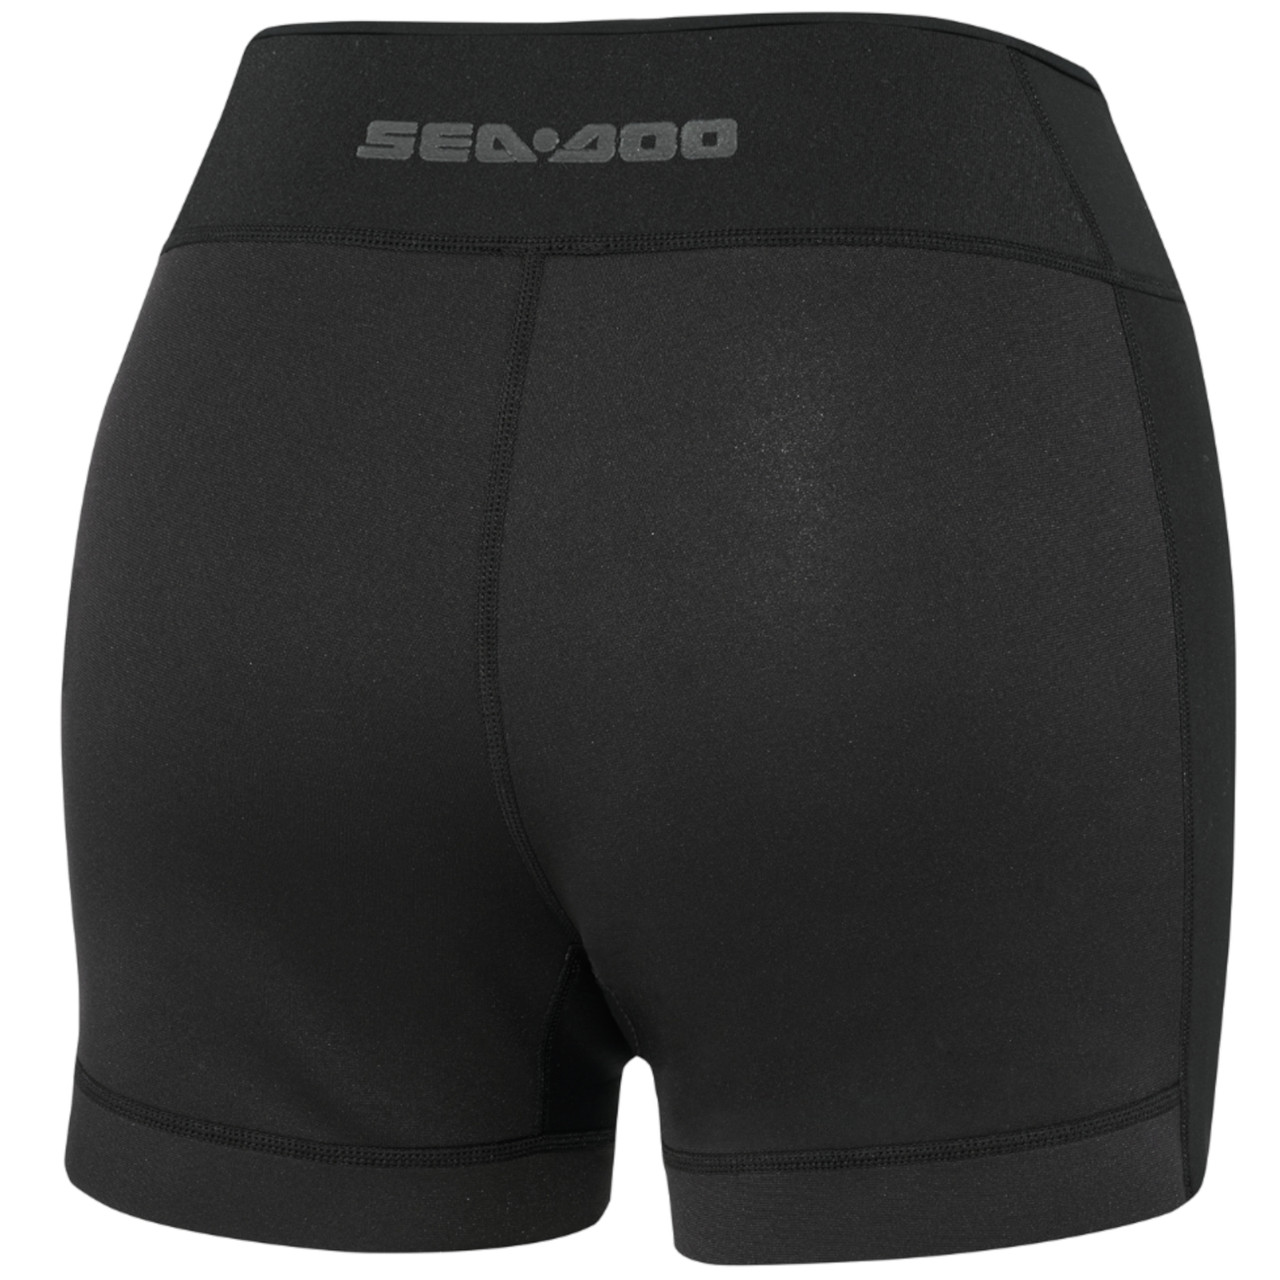 Sea-Doo New OEM, Women's Large 1.5mm Neoprene Shorty Shorts, 2868240990